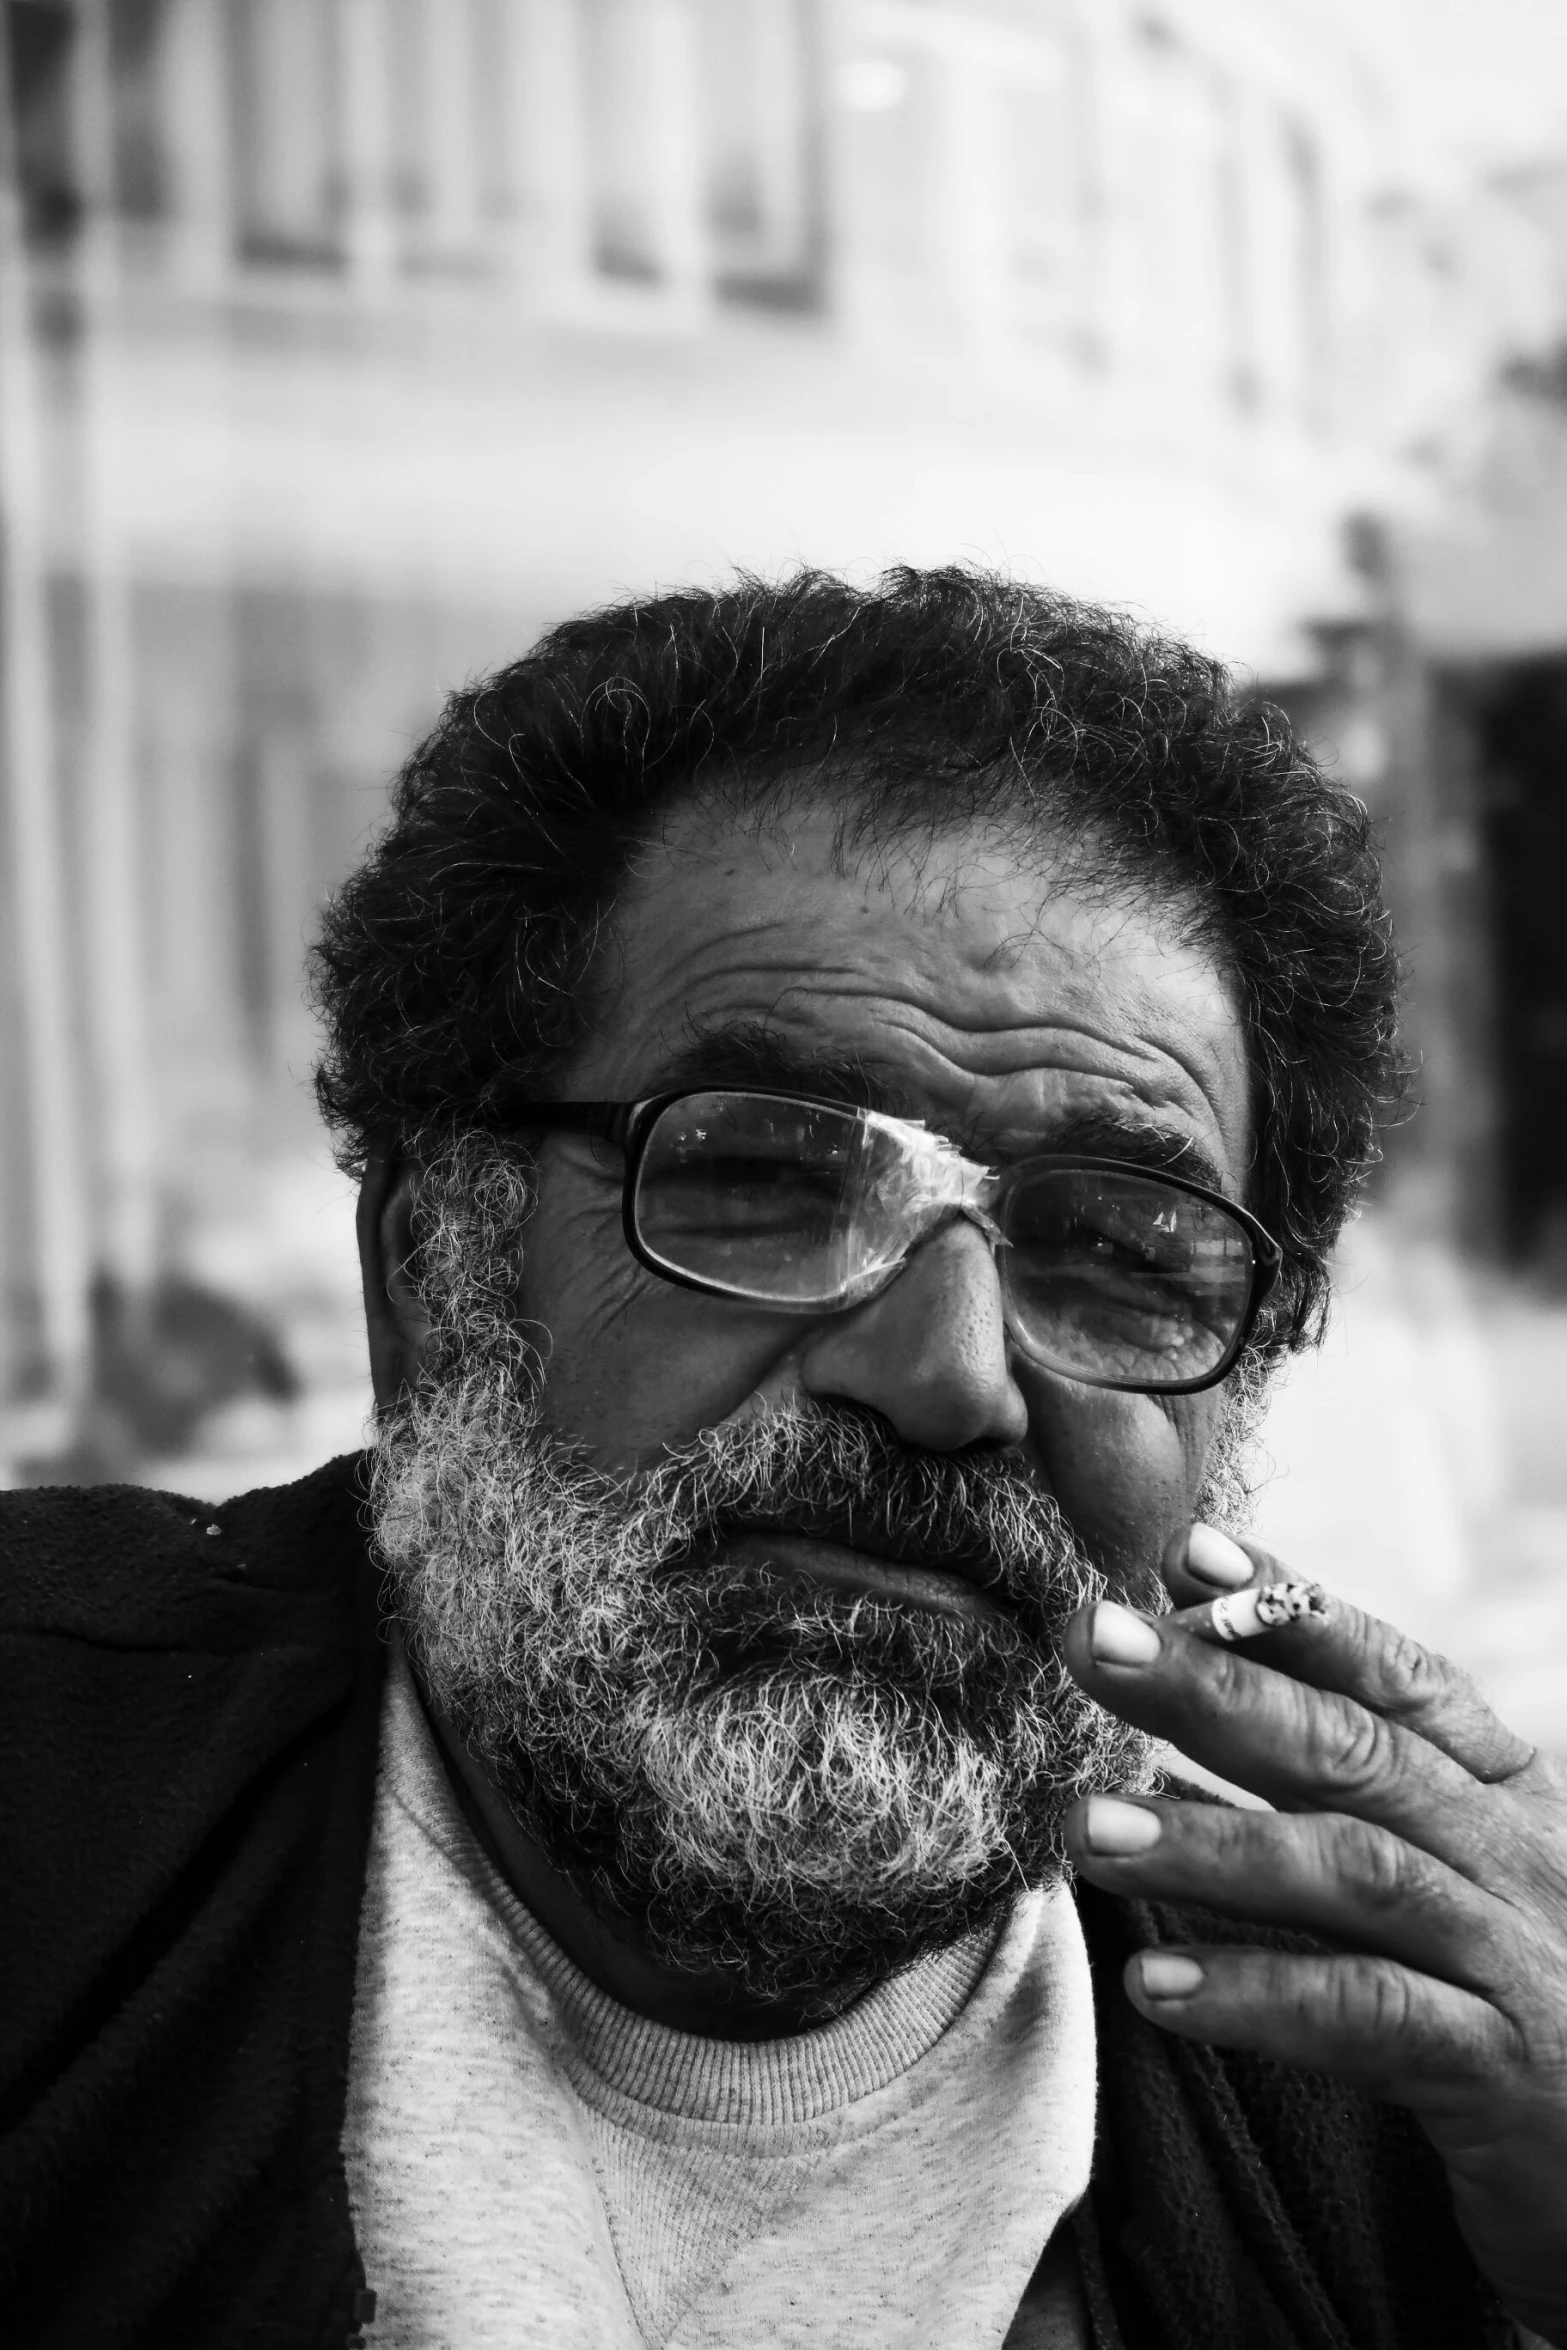 a bearded man smoking a cigarette on a street corner